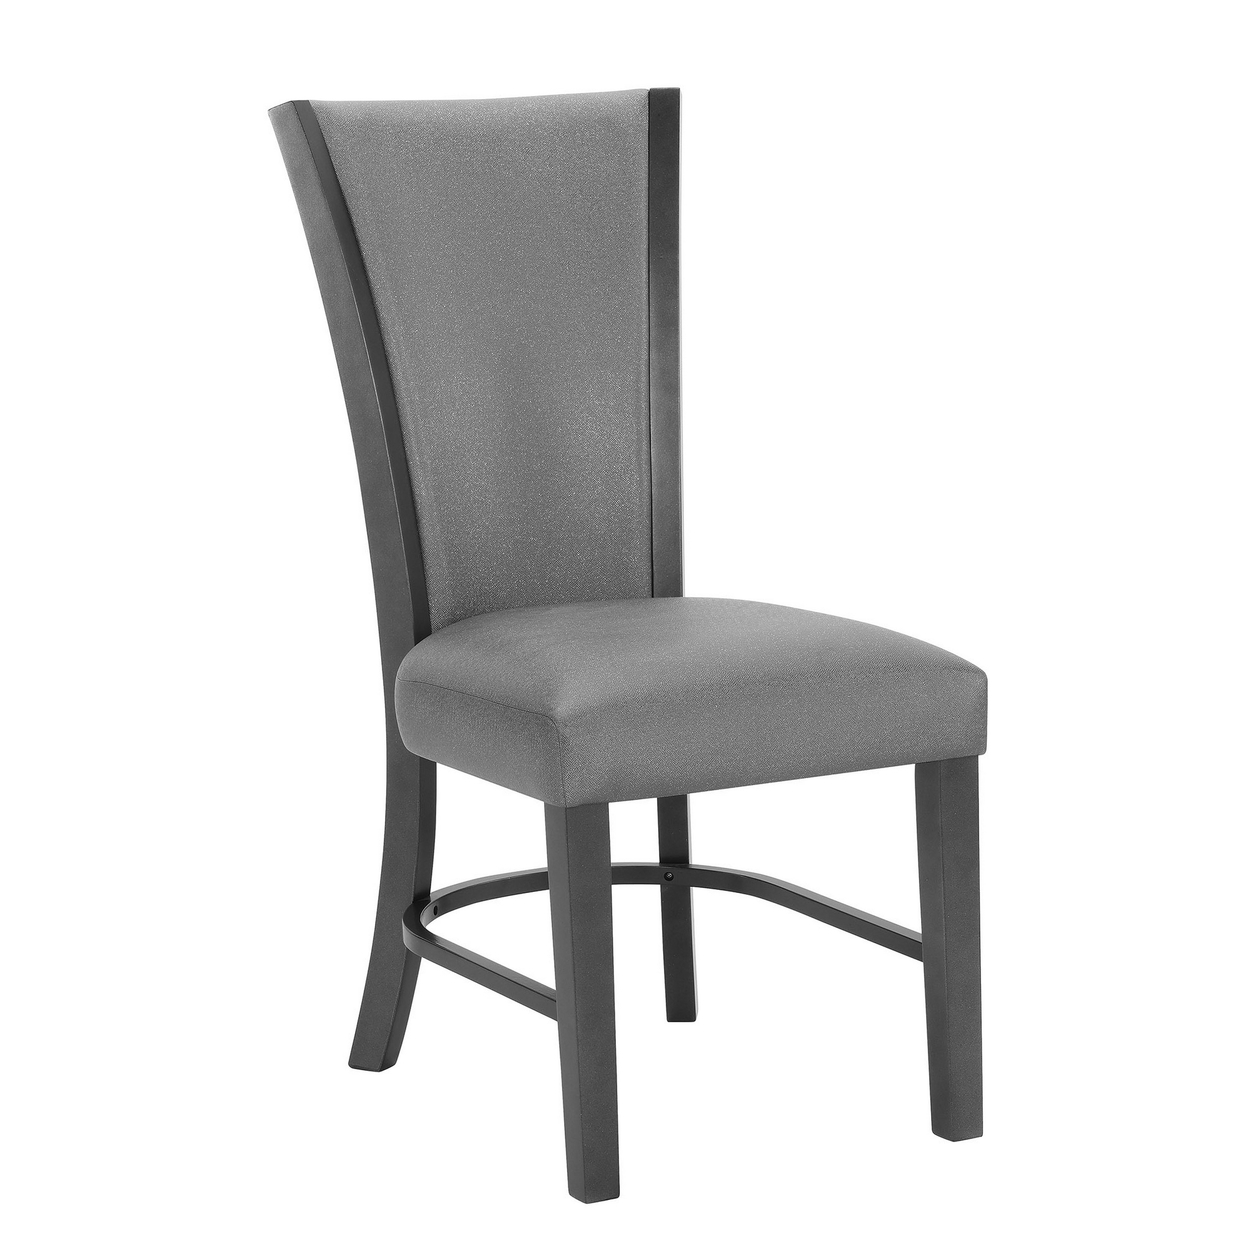 Brandon 24 Inch Side Chair Set Of 2, Gray Fabric Upholstery, Curved Back -Saltoro Sherpi